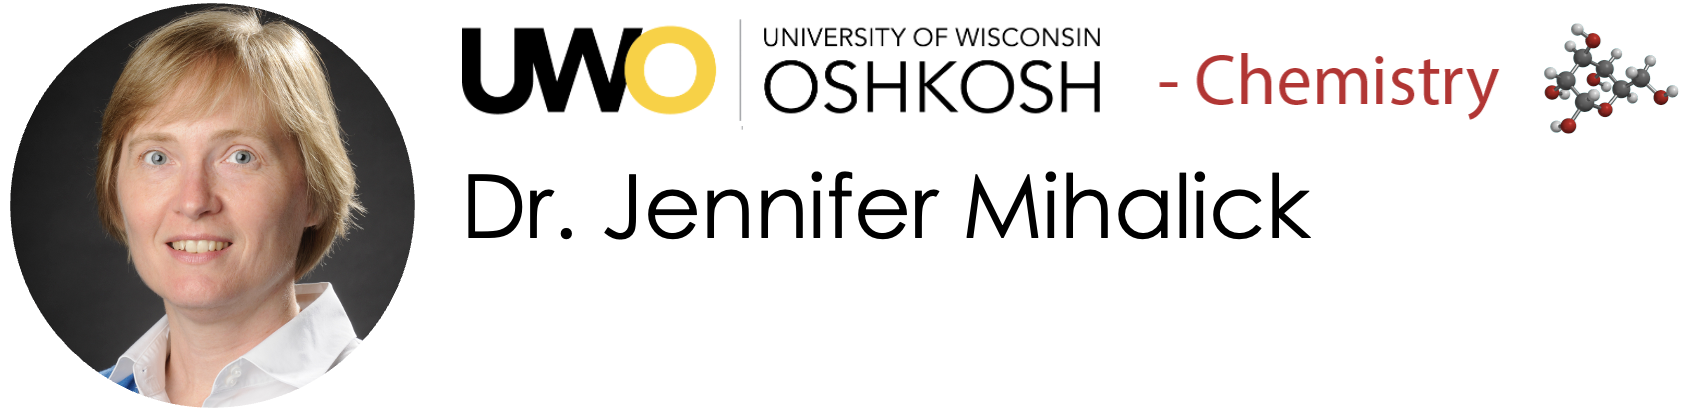 Jennifer E. Mihalick, Chemistry, UW Oshkosh